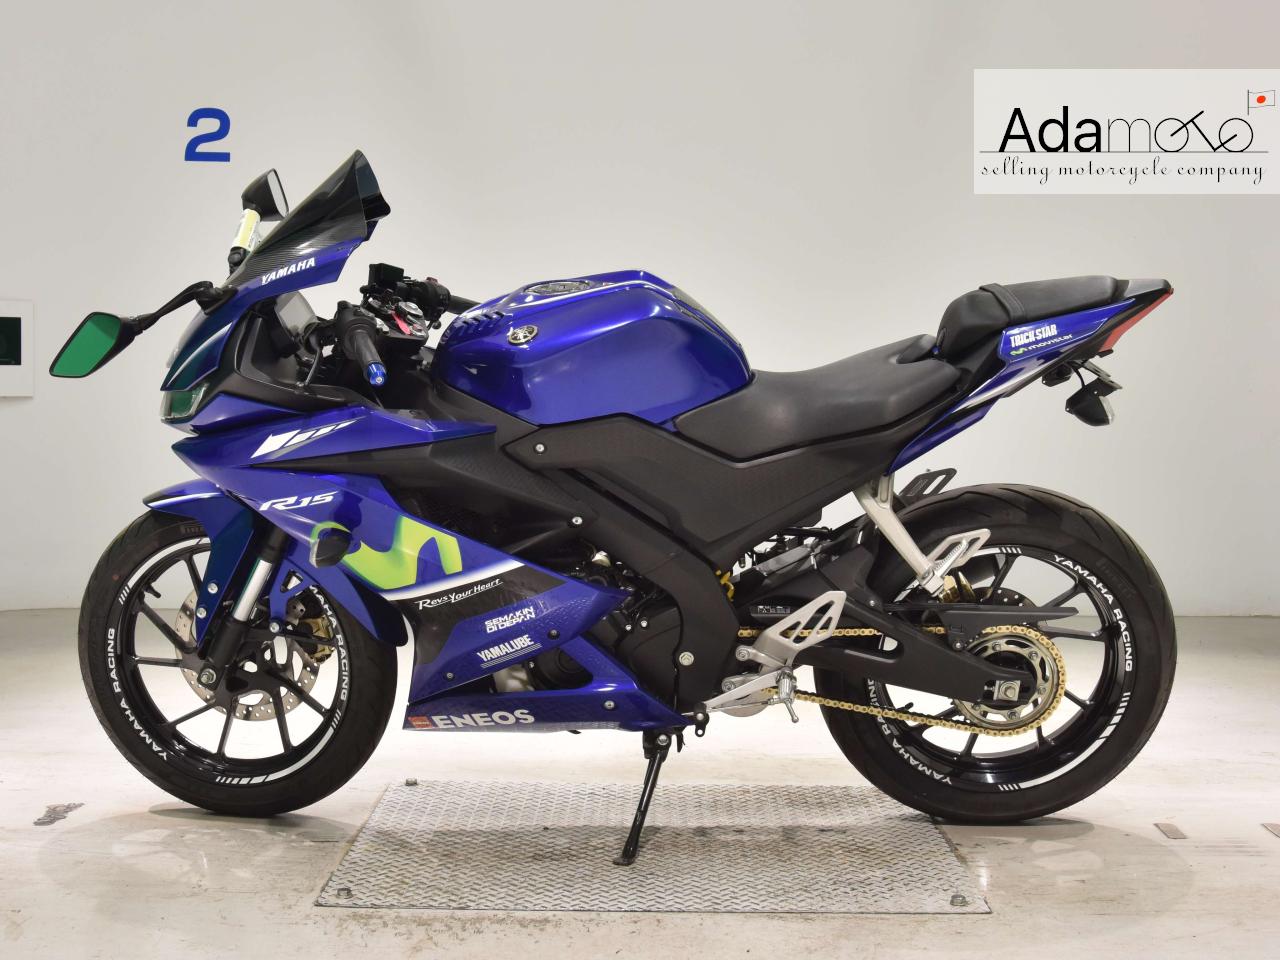 Yamaha YZF R15 - Adamoto - Motorcycles from Japan